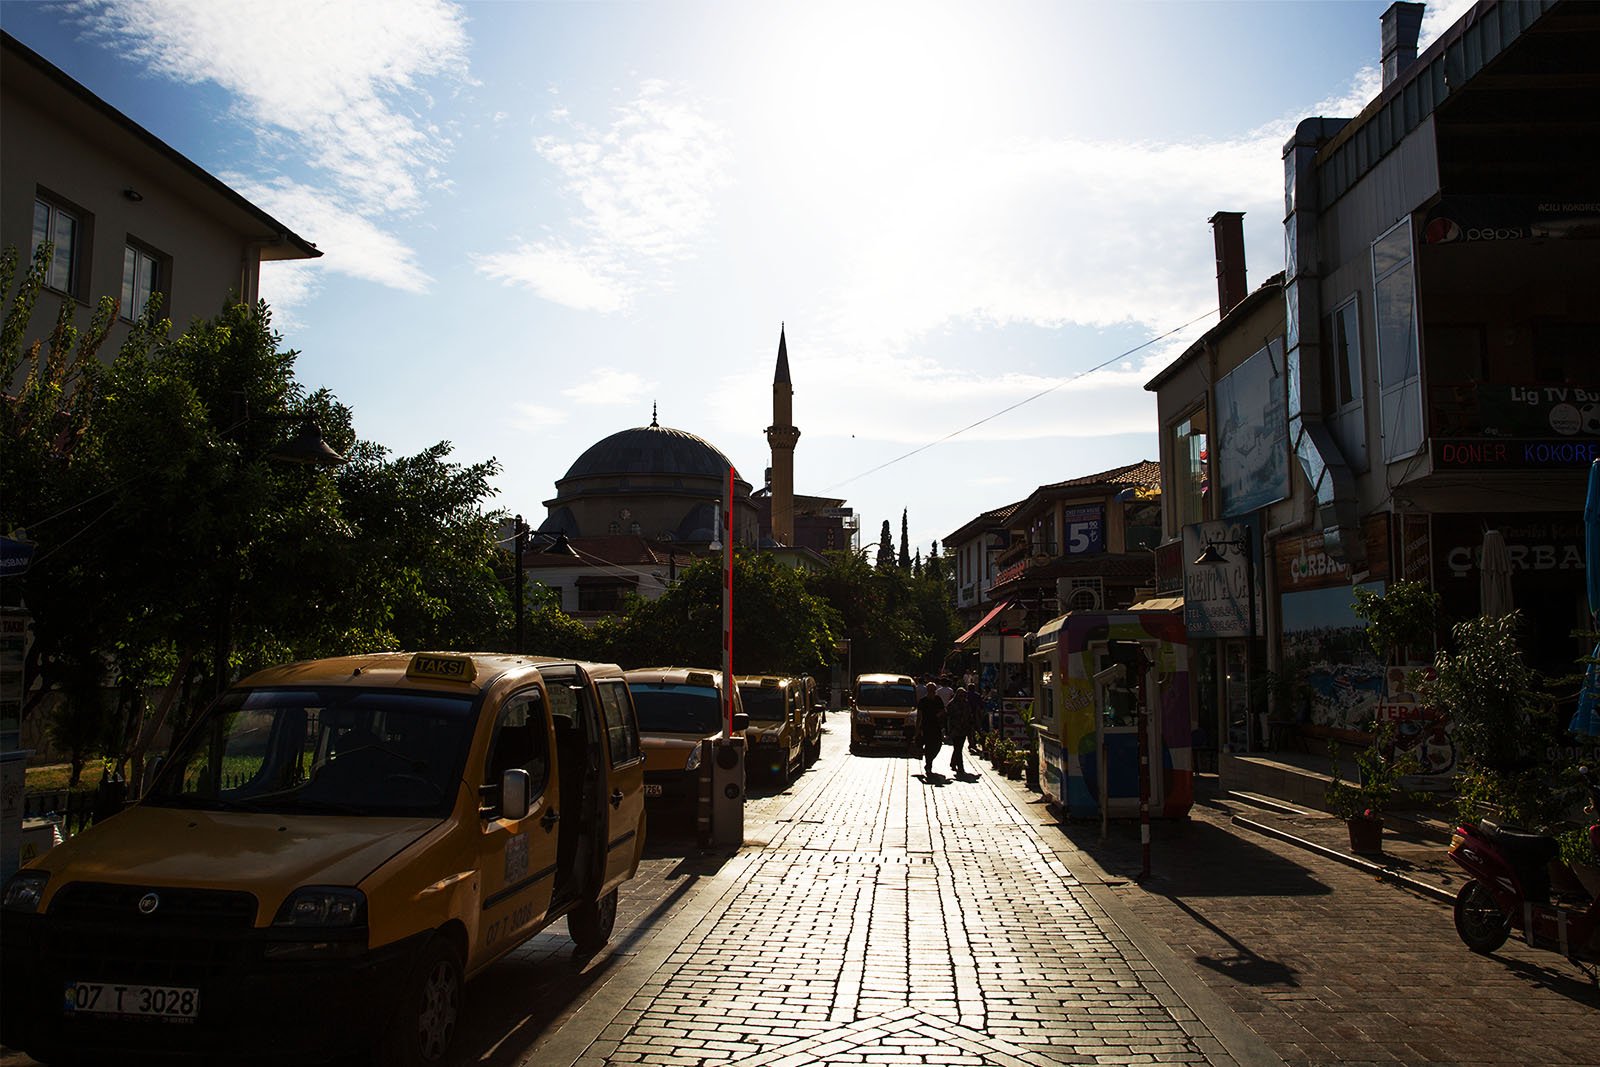 How to walk through the Kaleiçi district in Antalya